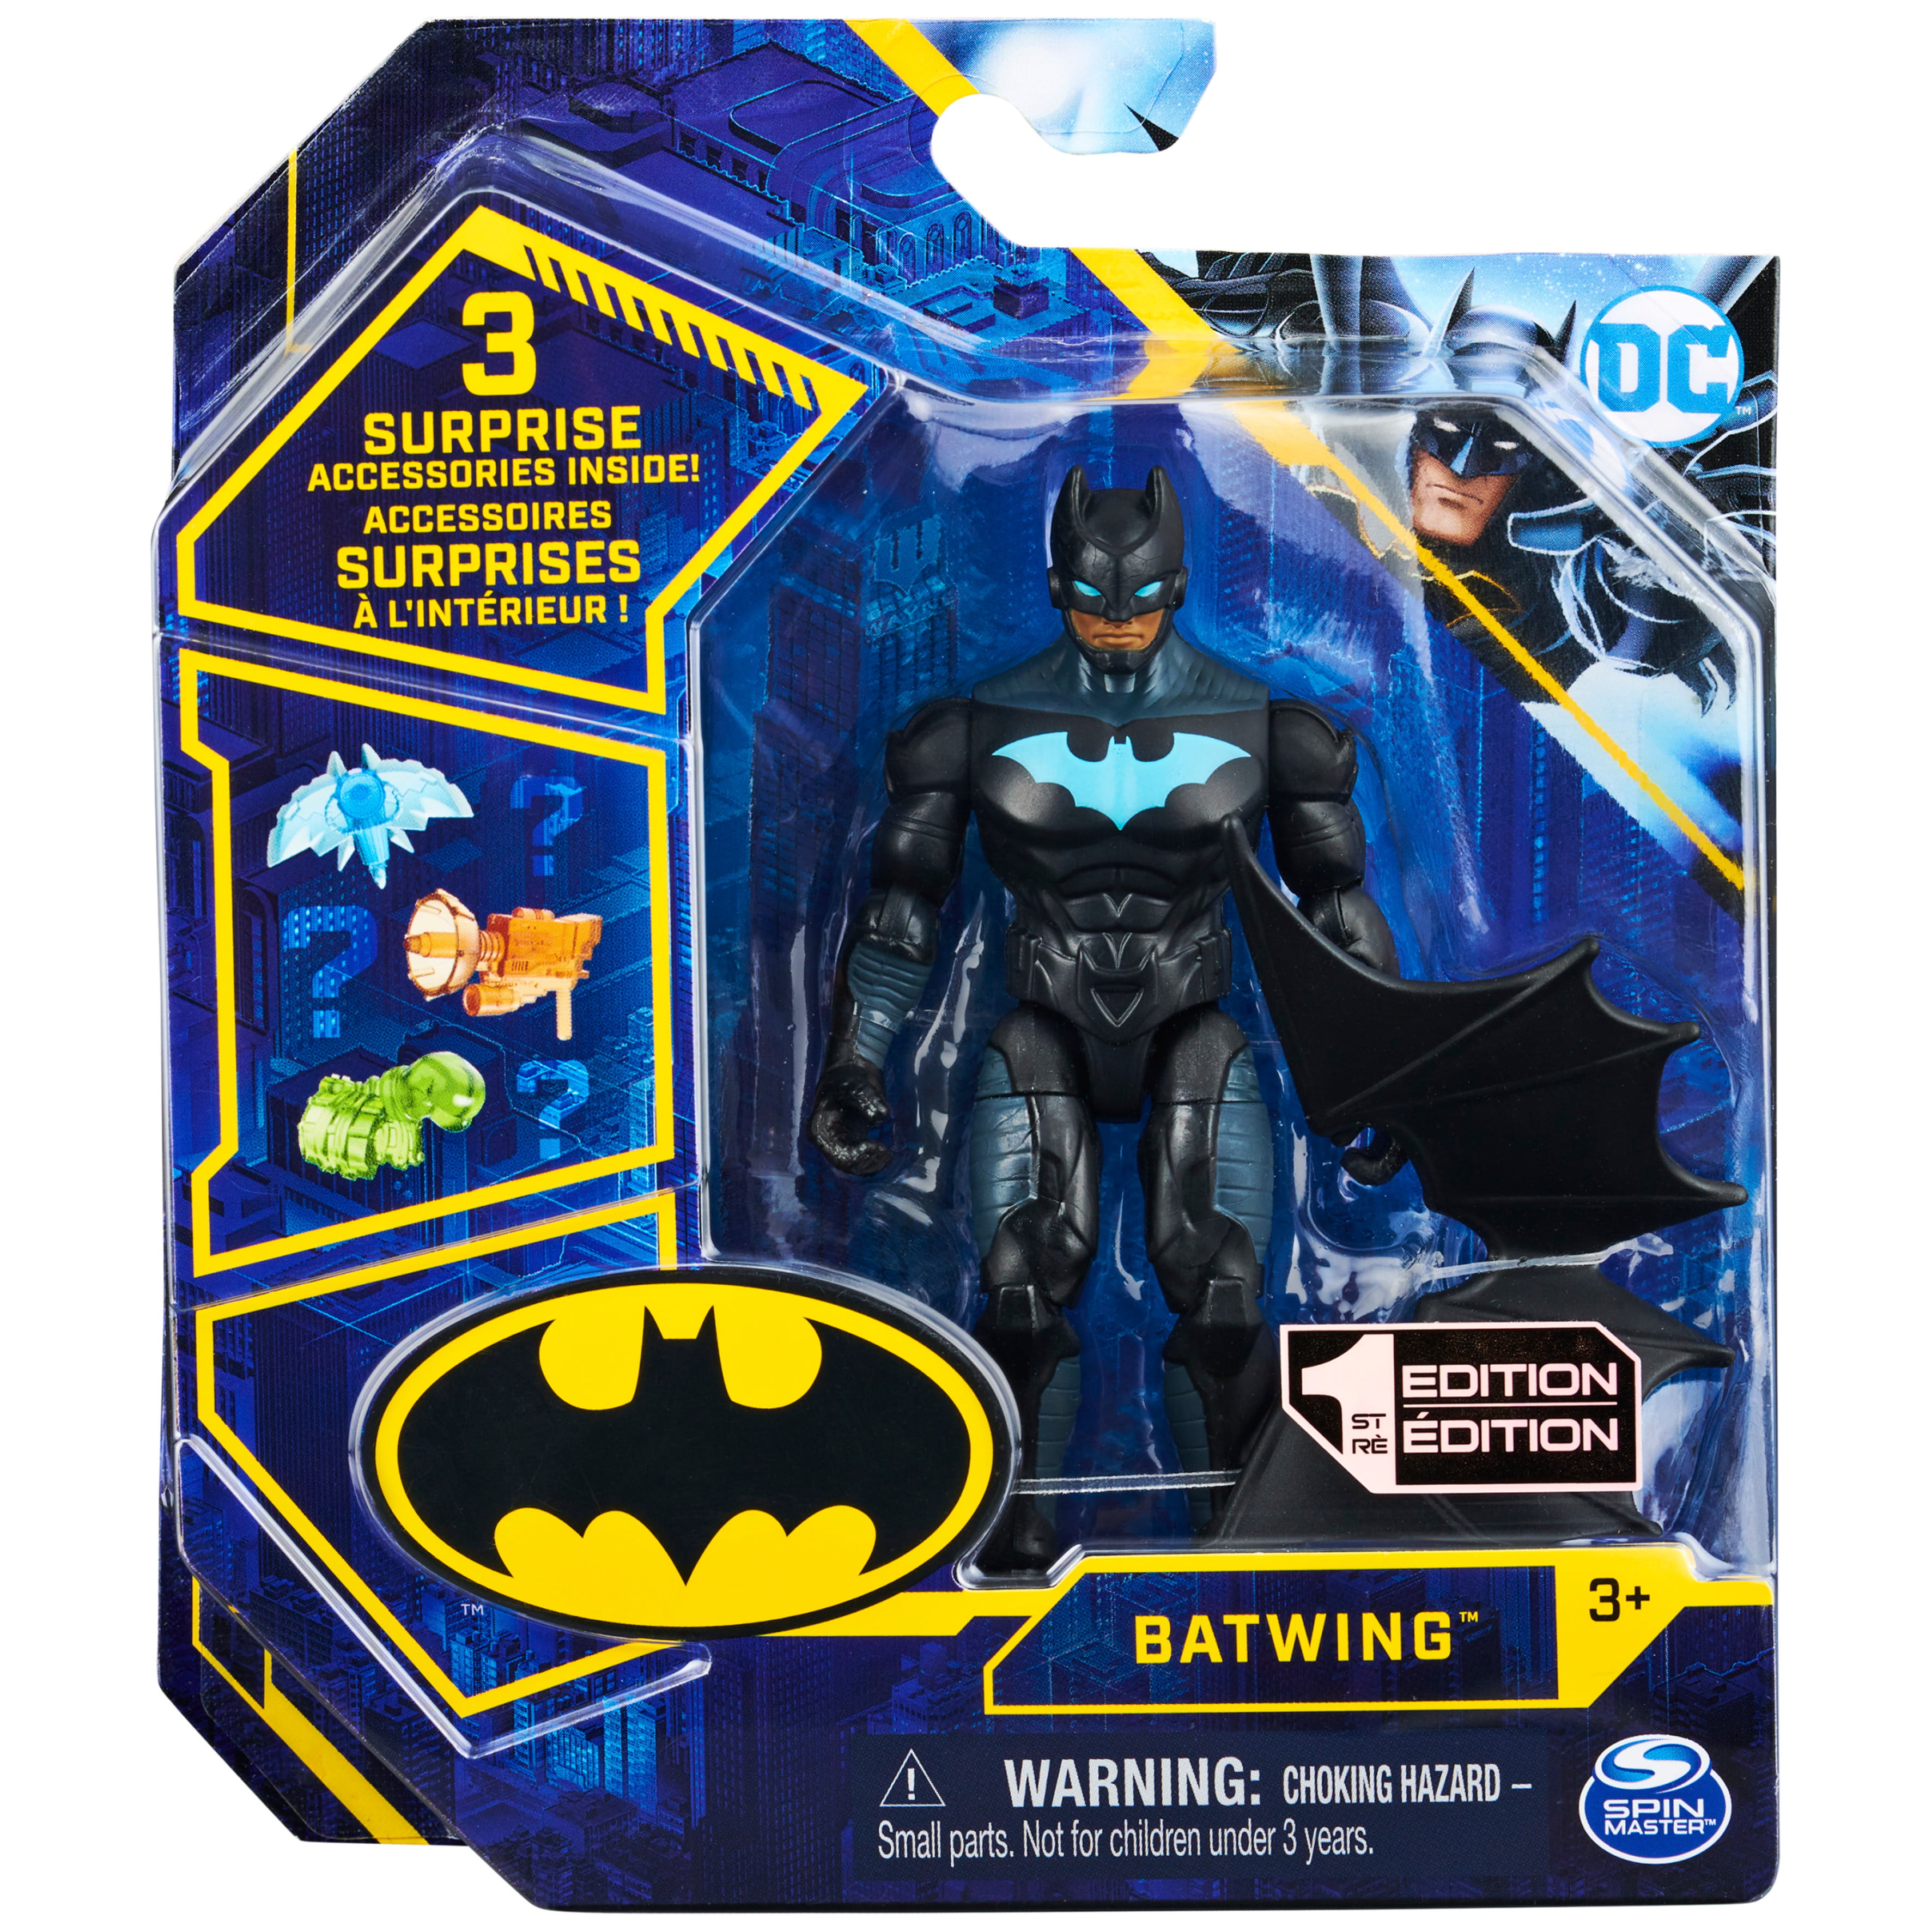 Brand New Plastic Toy Batman Figure Mask Gun for Kids Children Free Shipping 